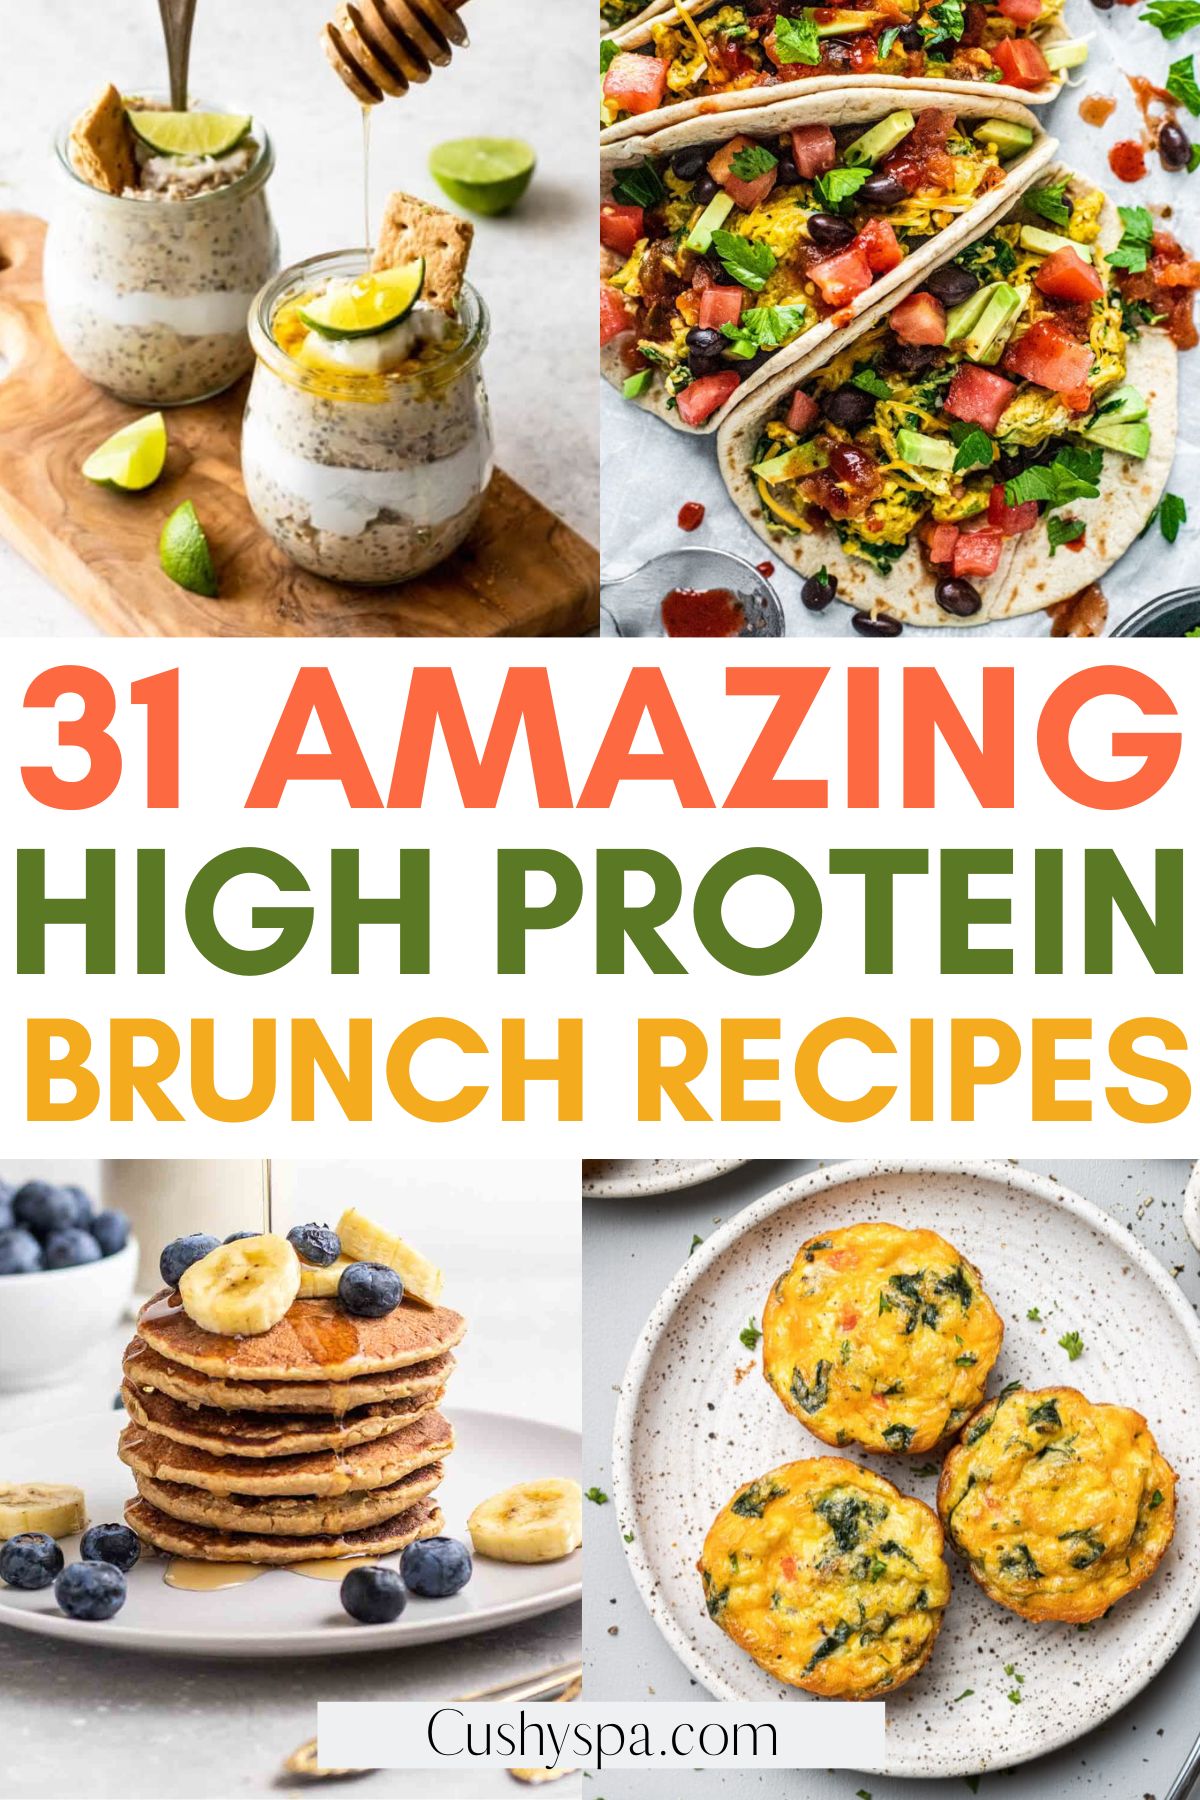 High protein brunch recipes